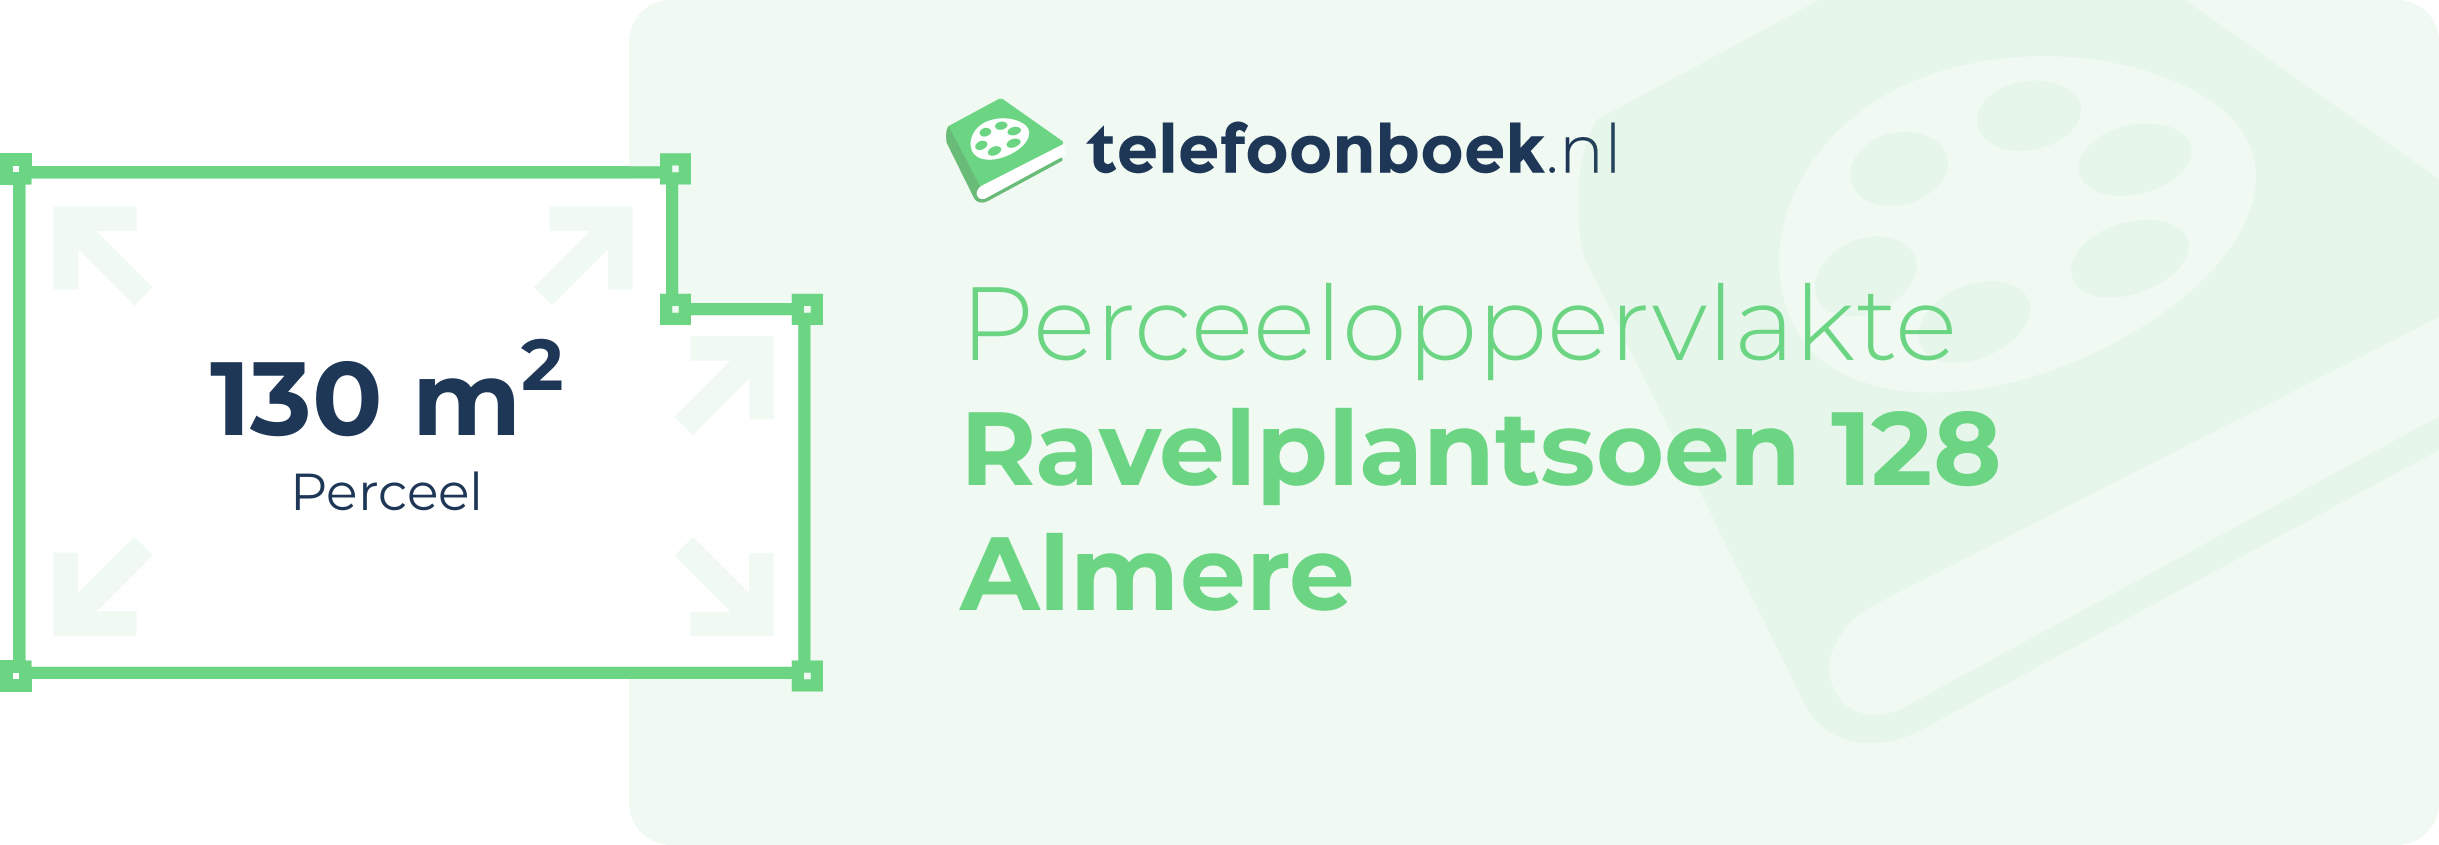 Perceeloppervlakte Ravelplantsoen 128 Almere